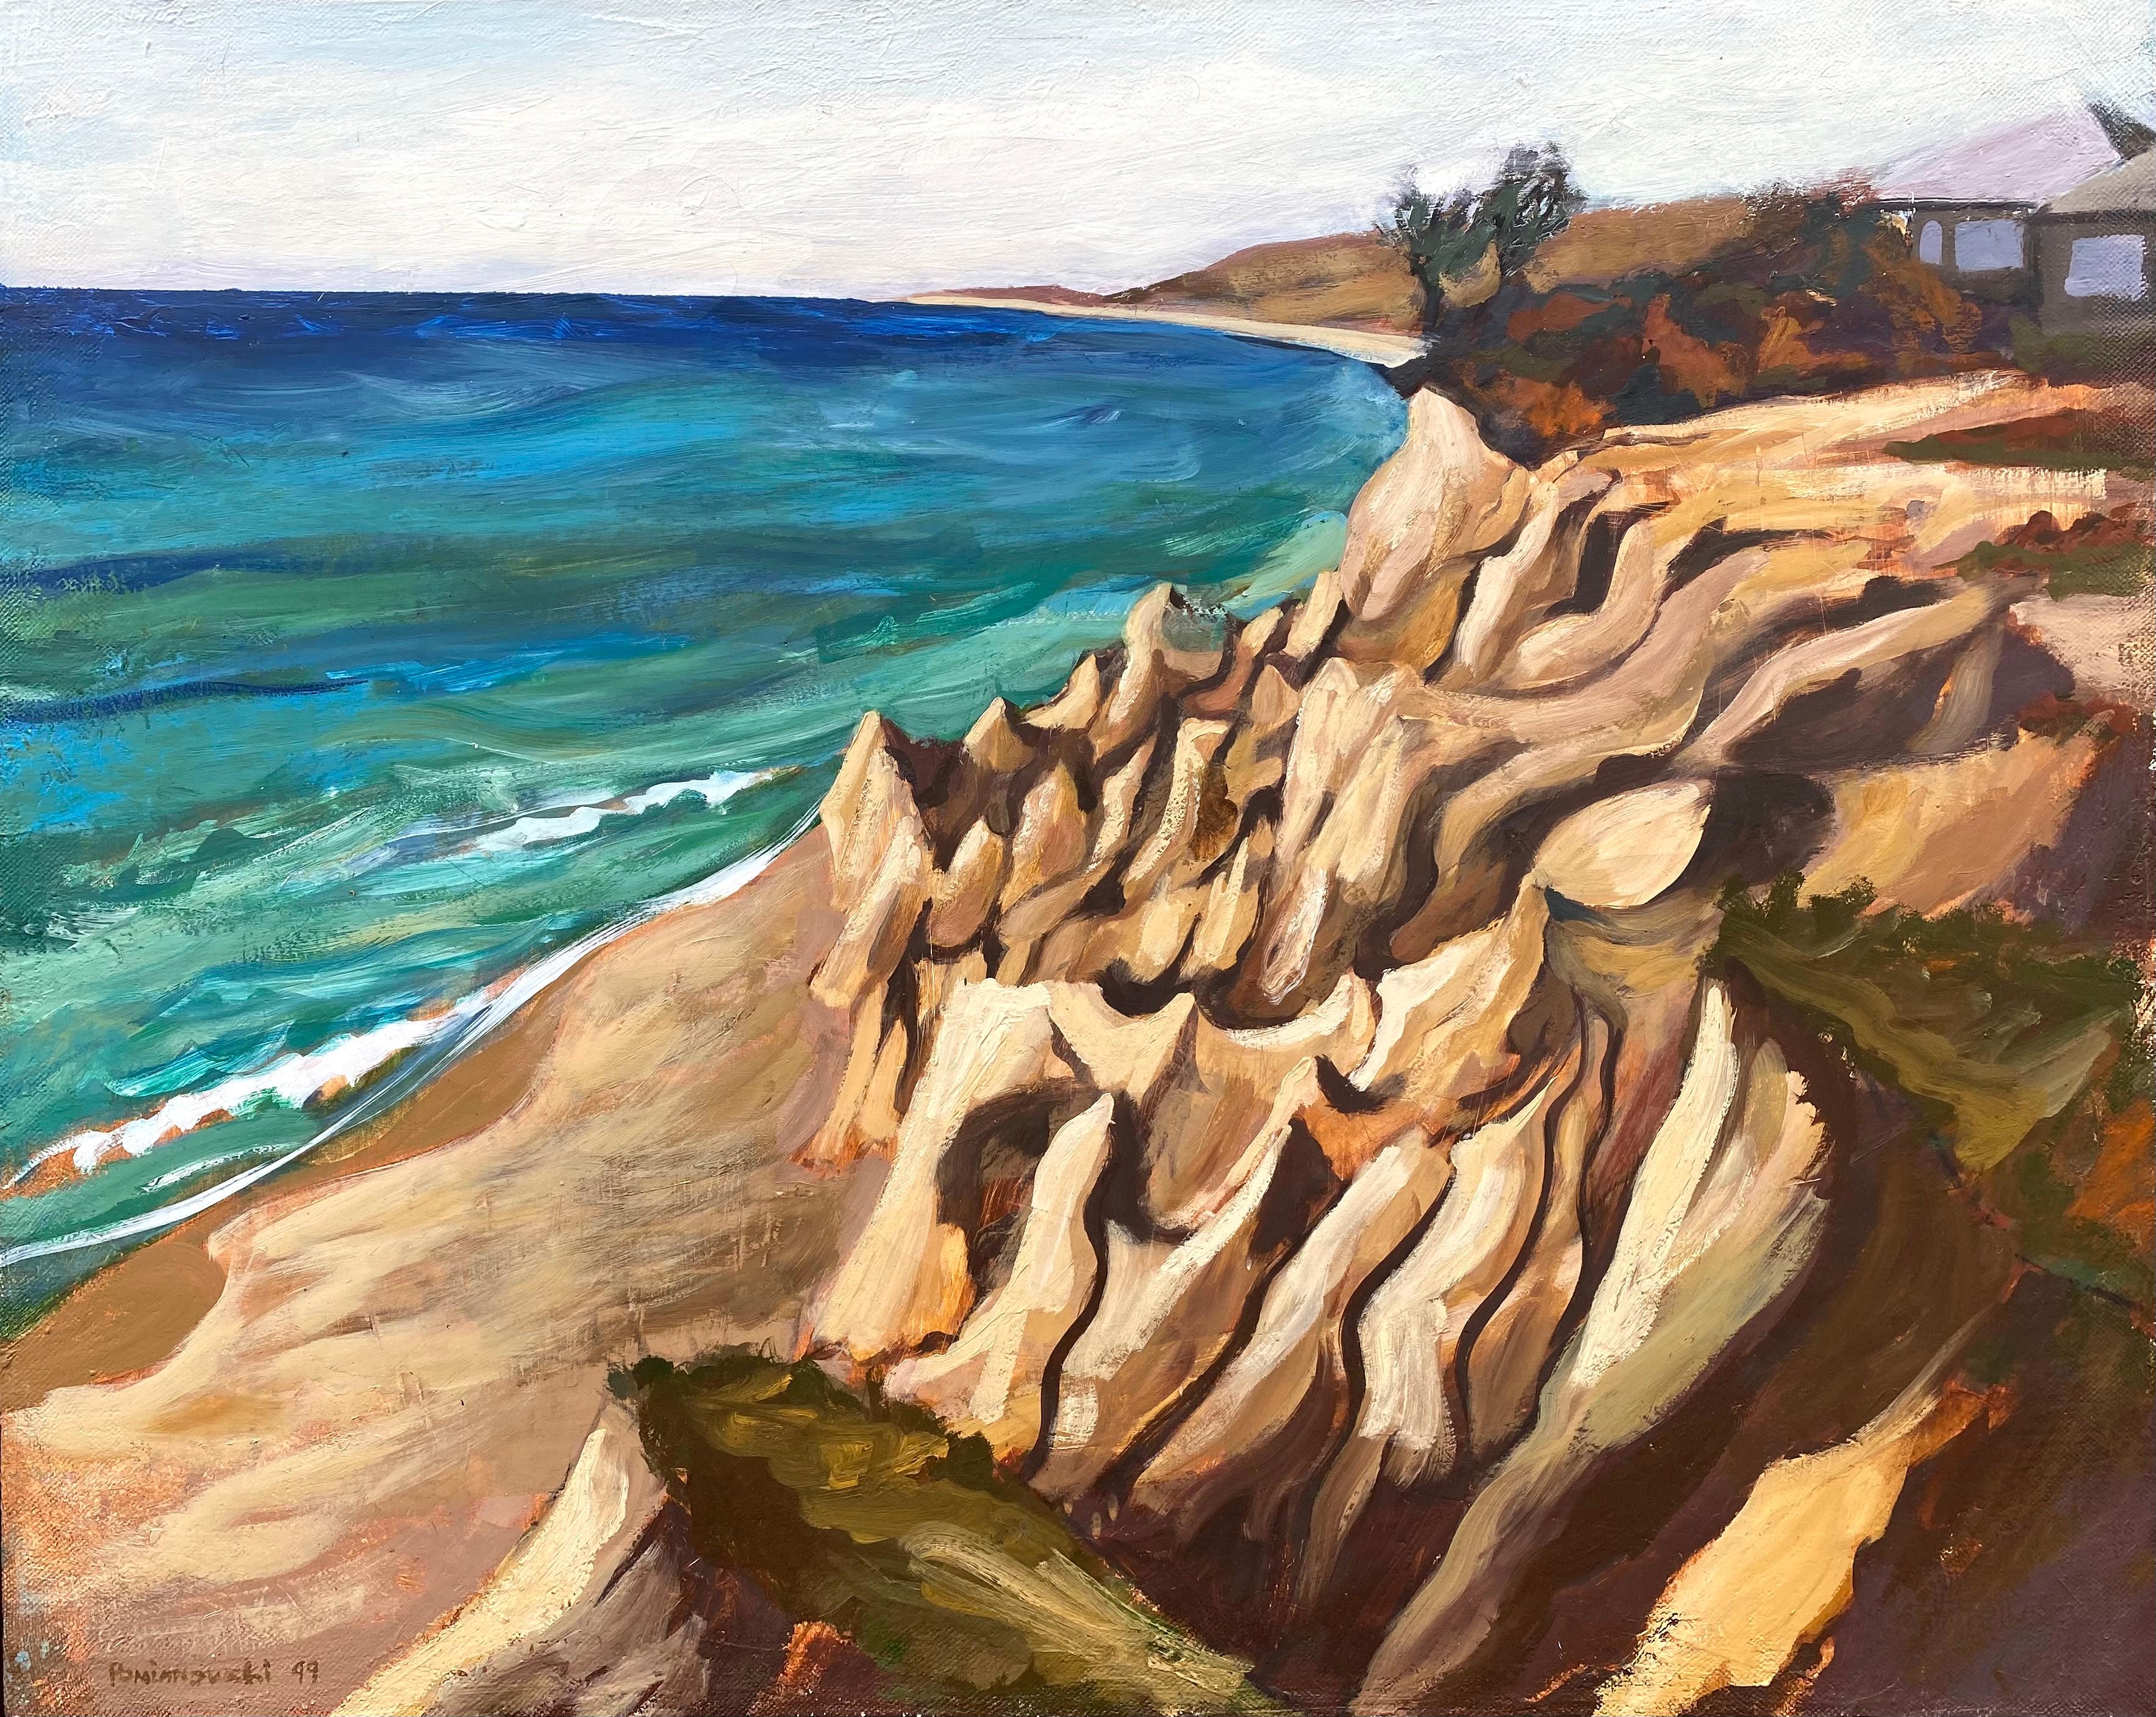 John Pomianowski Landscape Painting - “Montauk Cliffs”